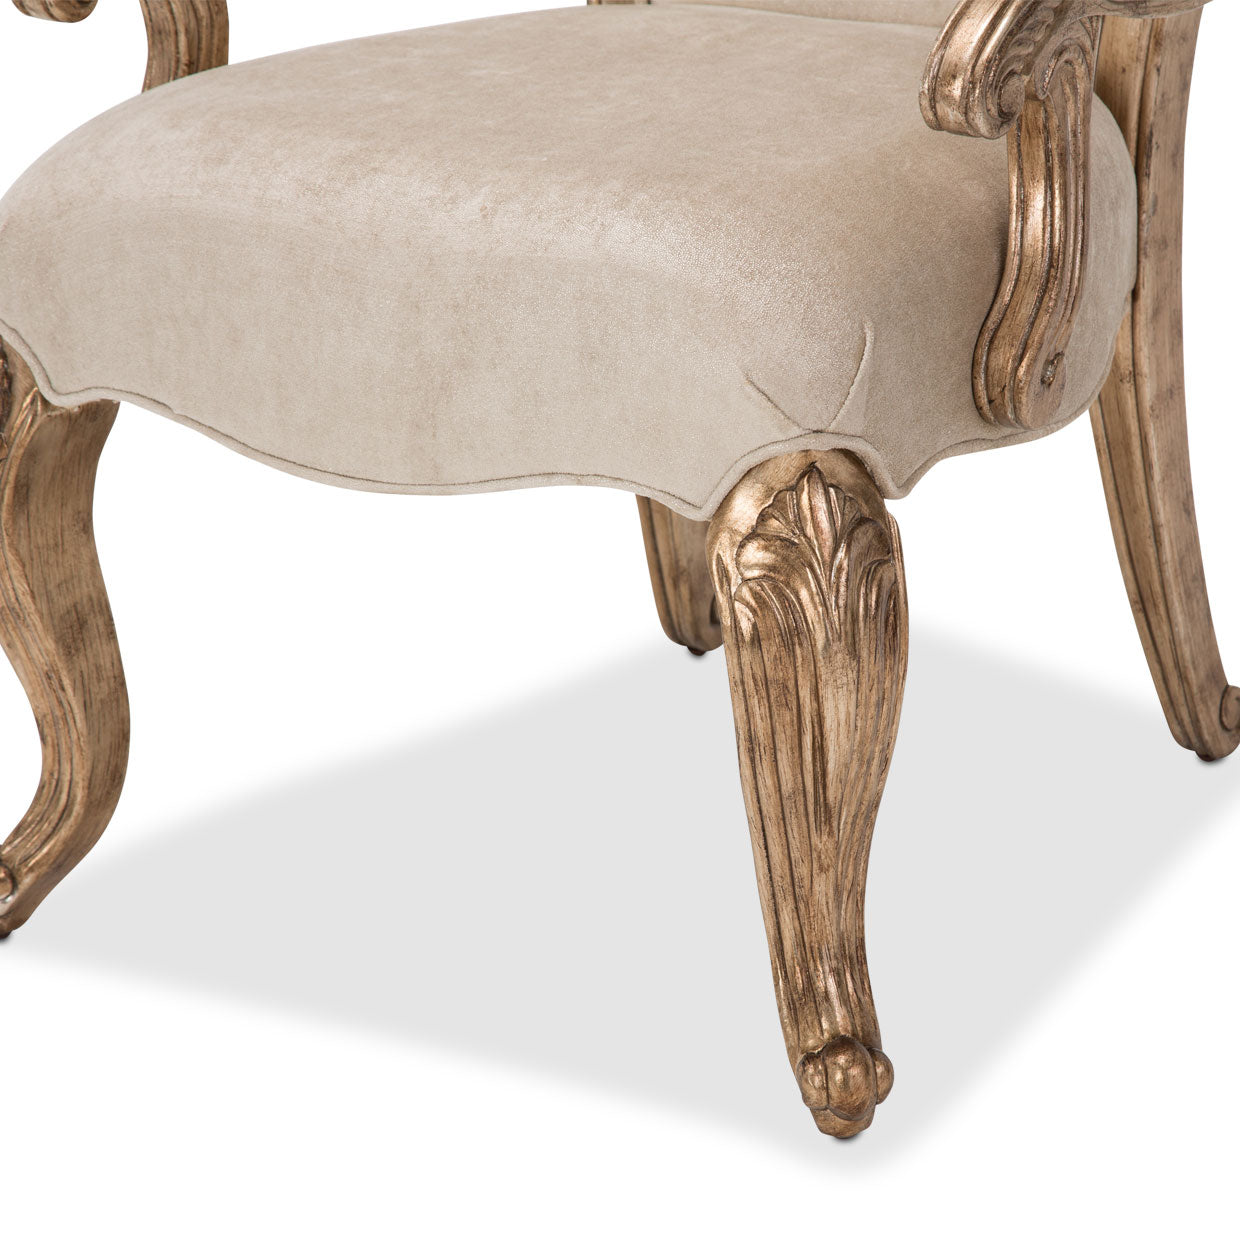 PLATINE DE ROYALE CHAMPAGNE Desk Chair - Dream art Gallery